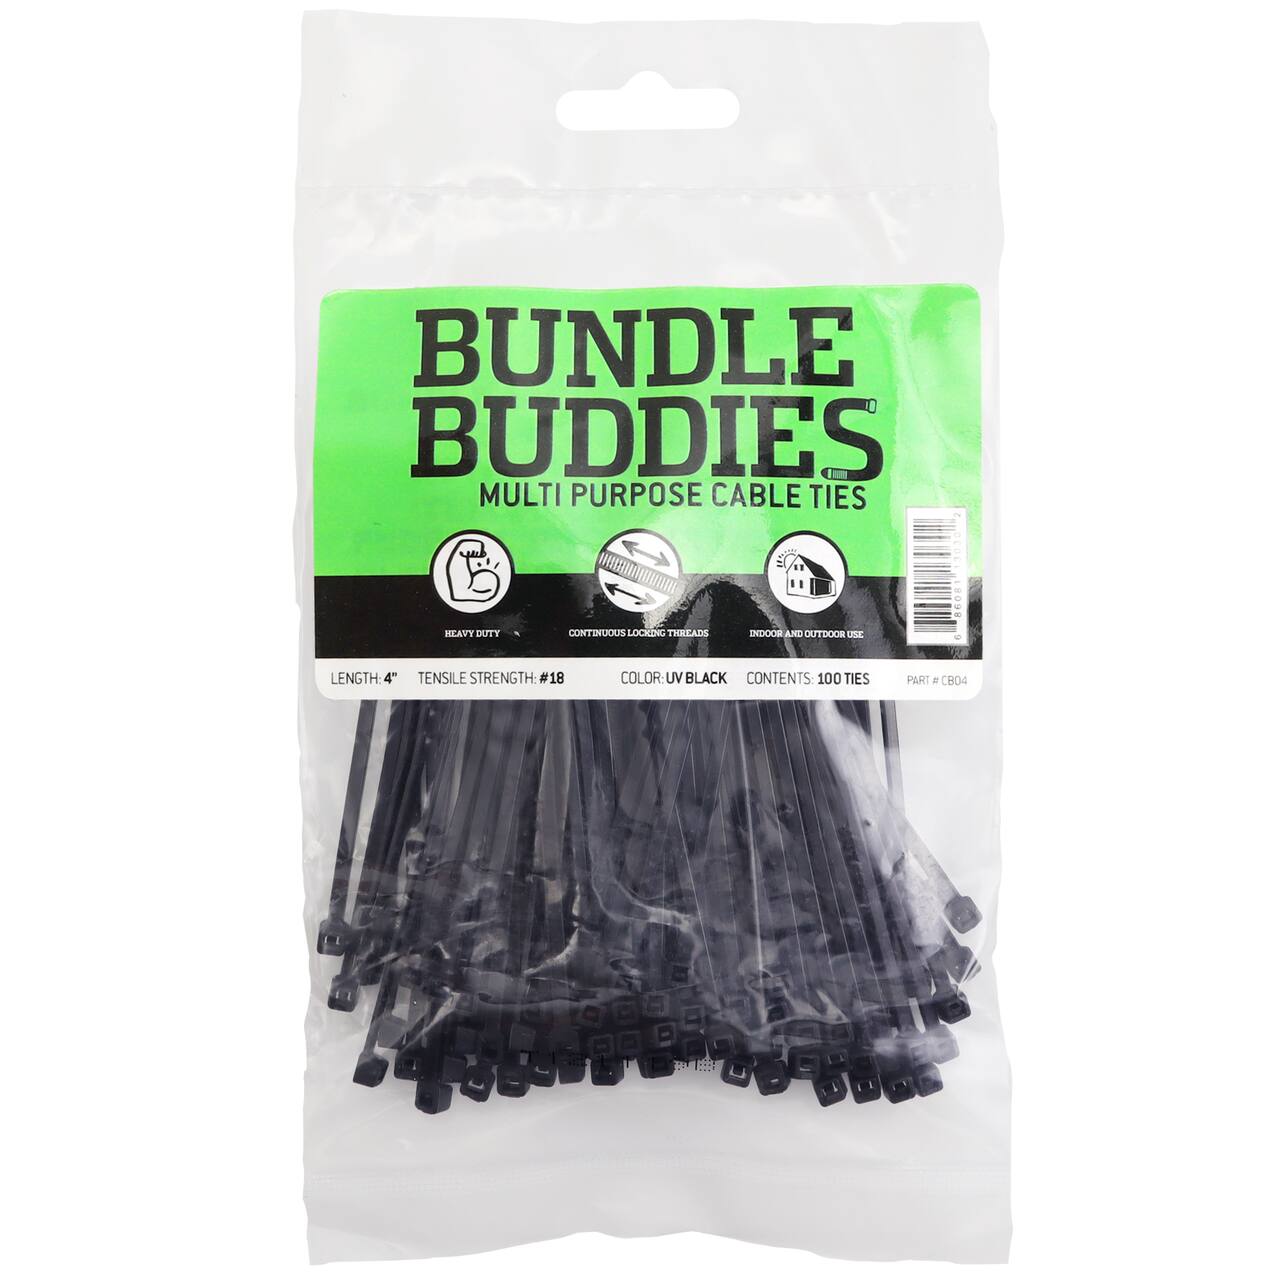 Bundle Buddies Black Multi Purpose Cable Ties